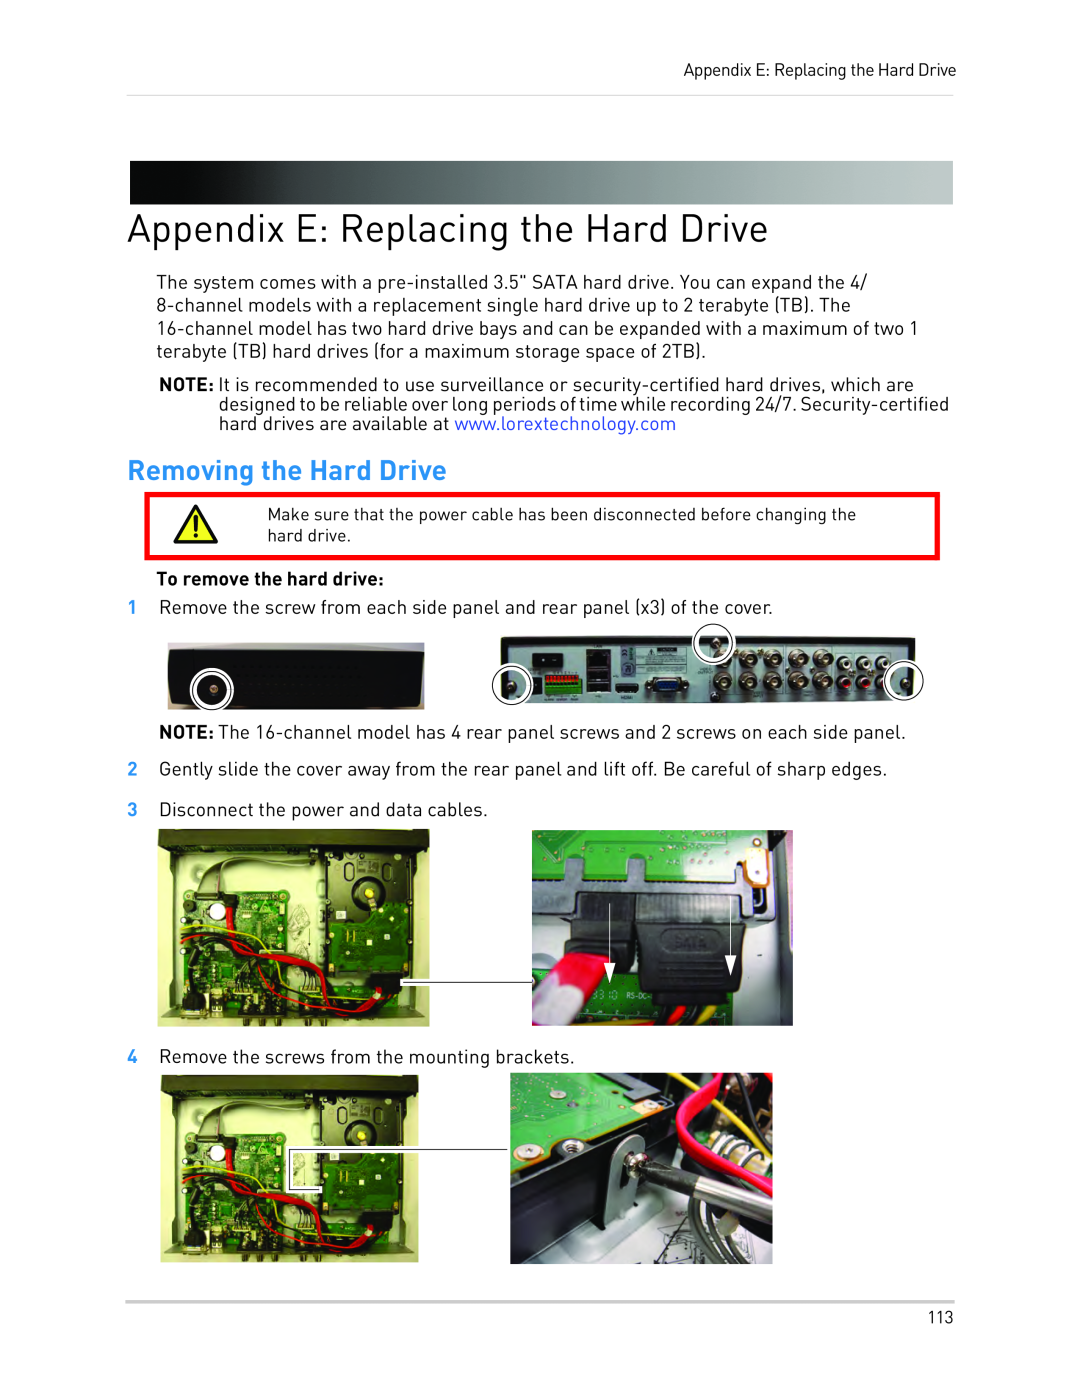 LOREX Technology LH130 Appendix E: Replacing the Hard Drive, Removing the Hard Drive, To remove the hard drive 